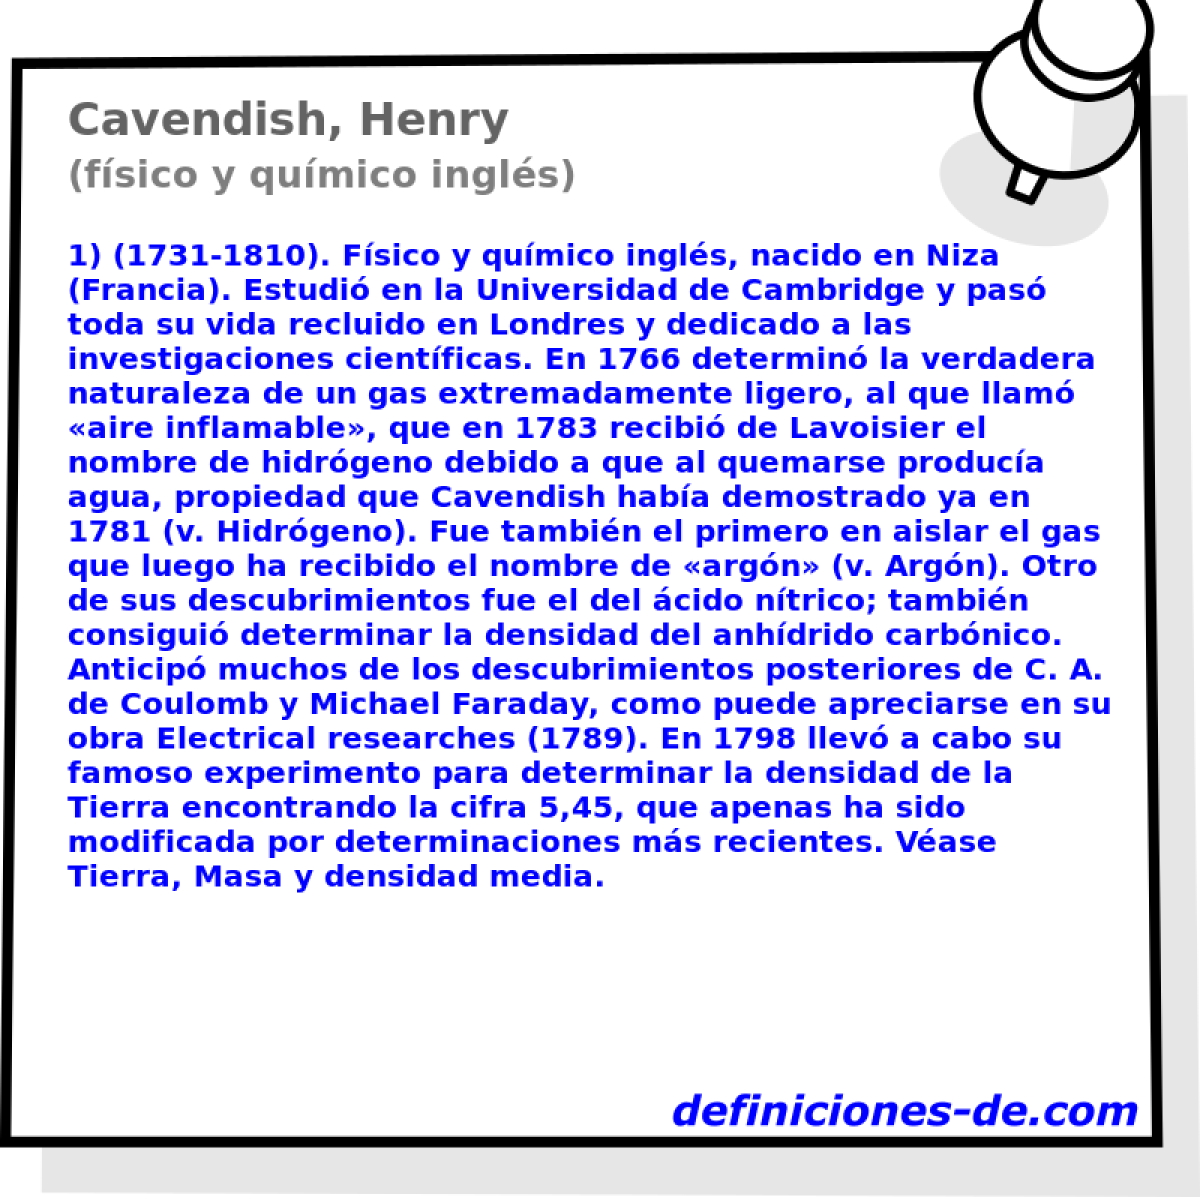 Cavendish, Henry (fsico y qumico ingls)